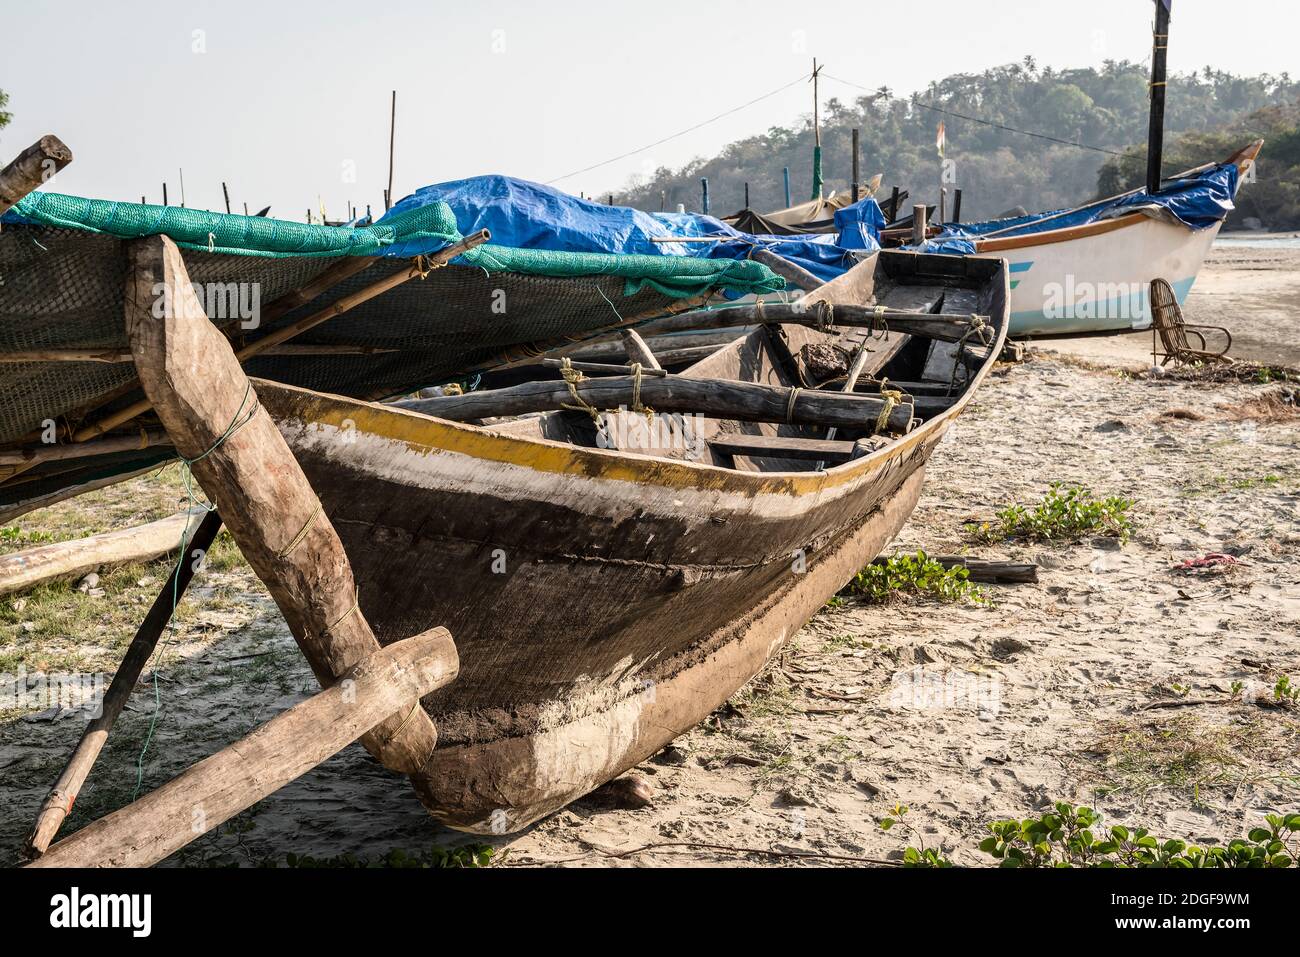 https://c8.alamy.com/comp/2DGF9WM/old-wooden-fishing-boats-on-the-sandy-shore-of-the-indian-ocean-2DGF9WM.jpg